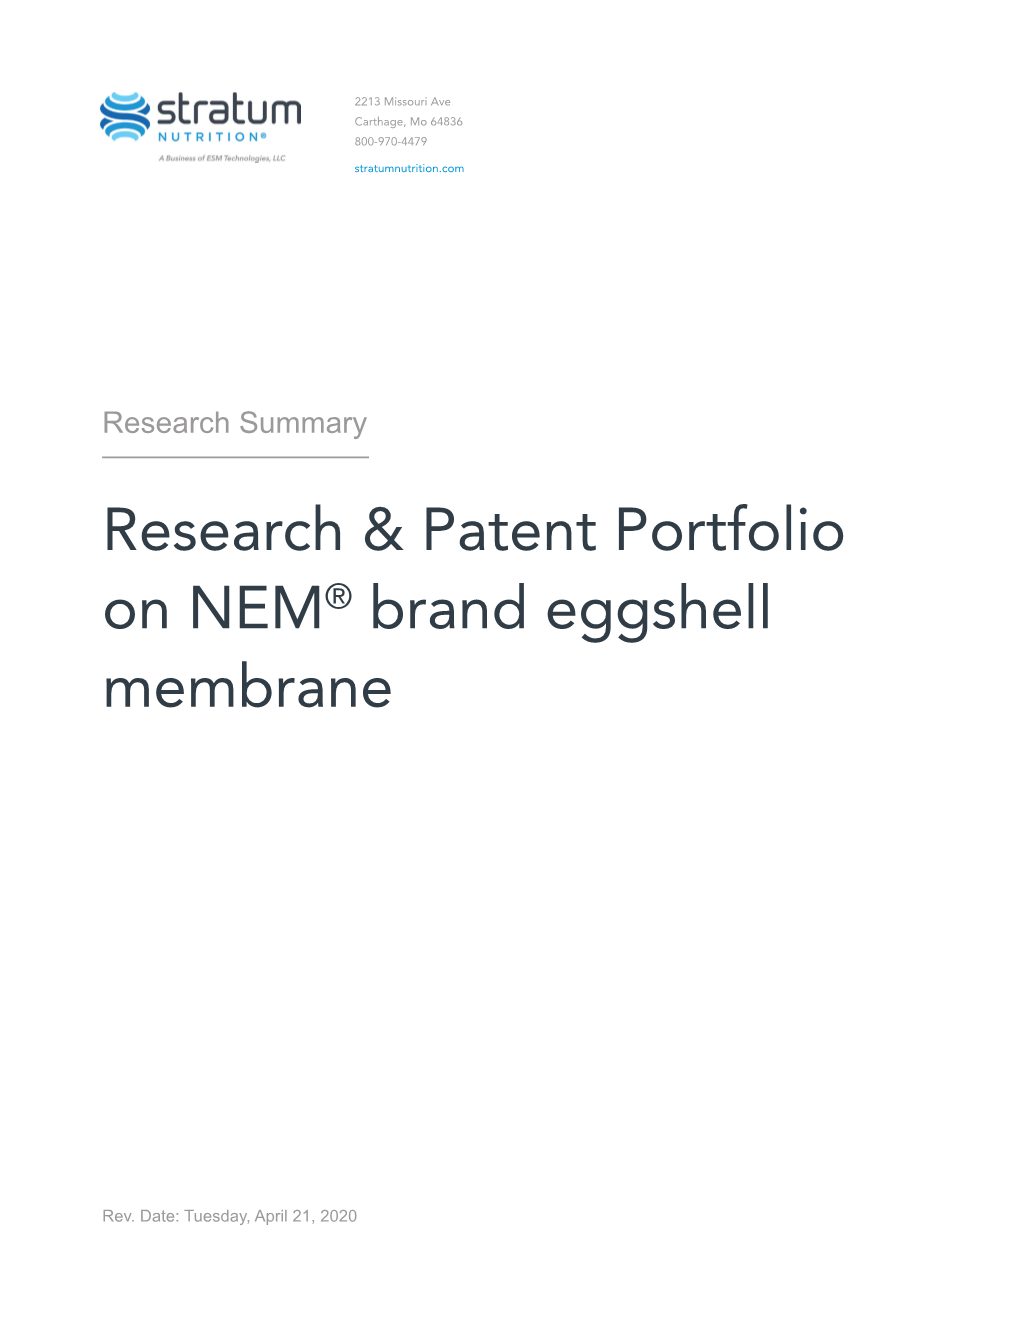 Research & Patent Portfolio on NEM® Brand Eggshell Membrane